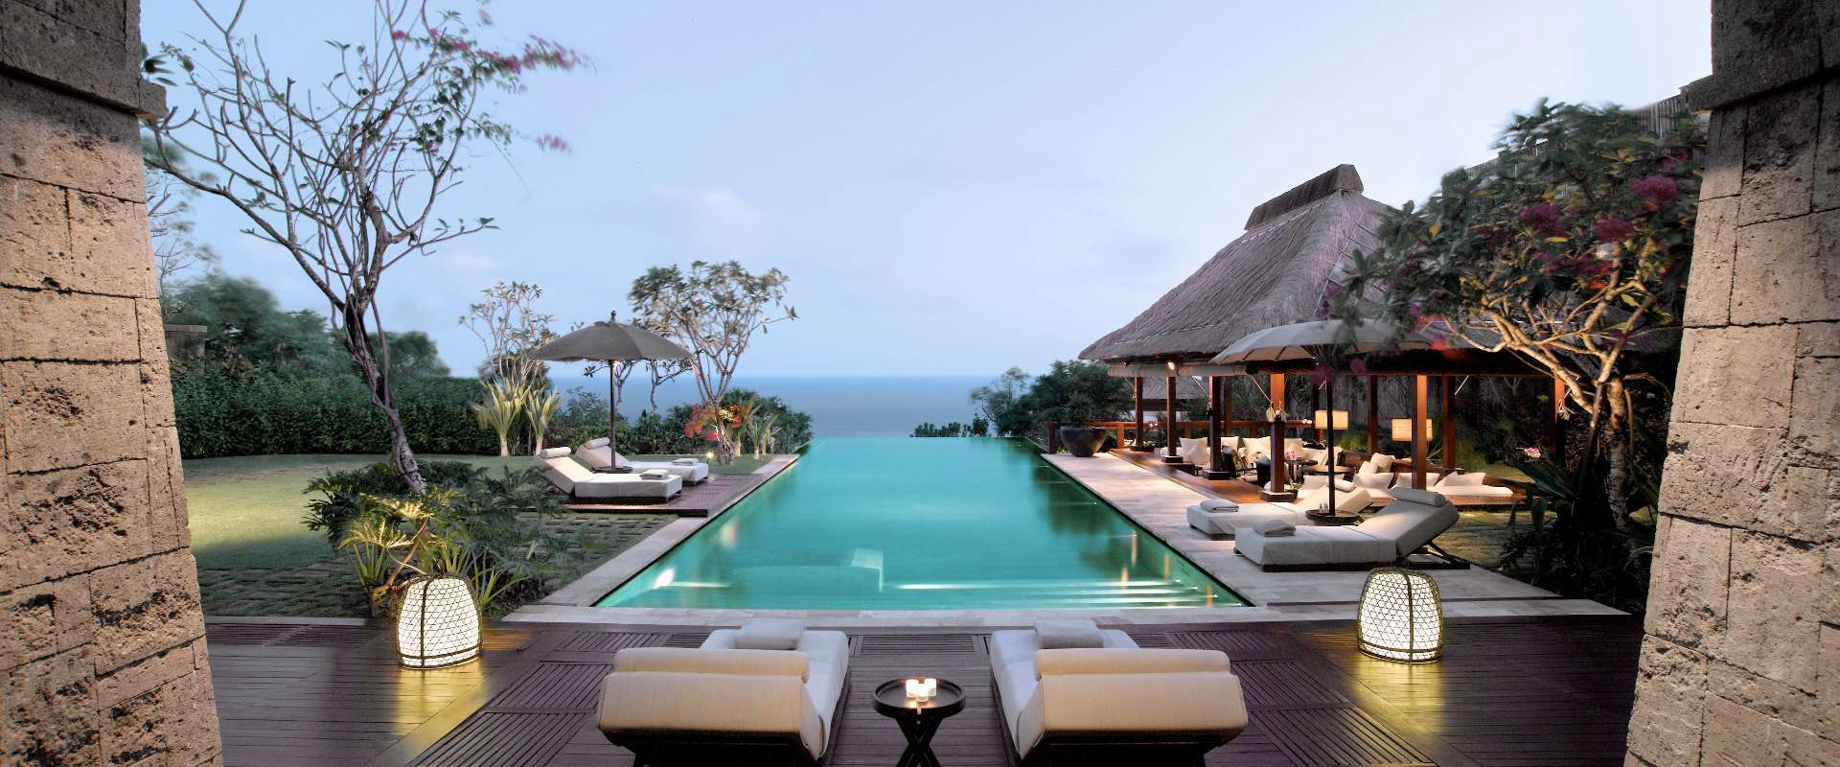 Bvlgari Resort Bali - Uluwatu, Bali, Indonesia - The Bvlgari Villa Pool Deck Ocean View Twilight